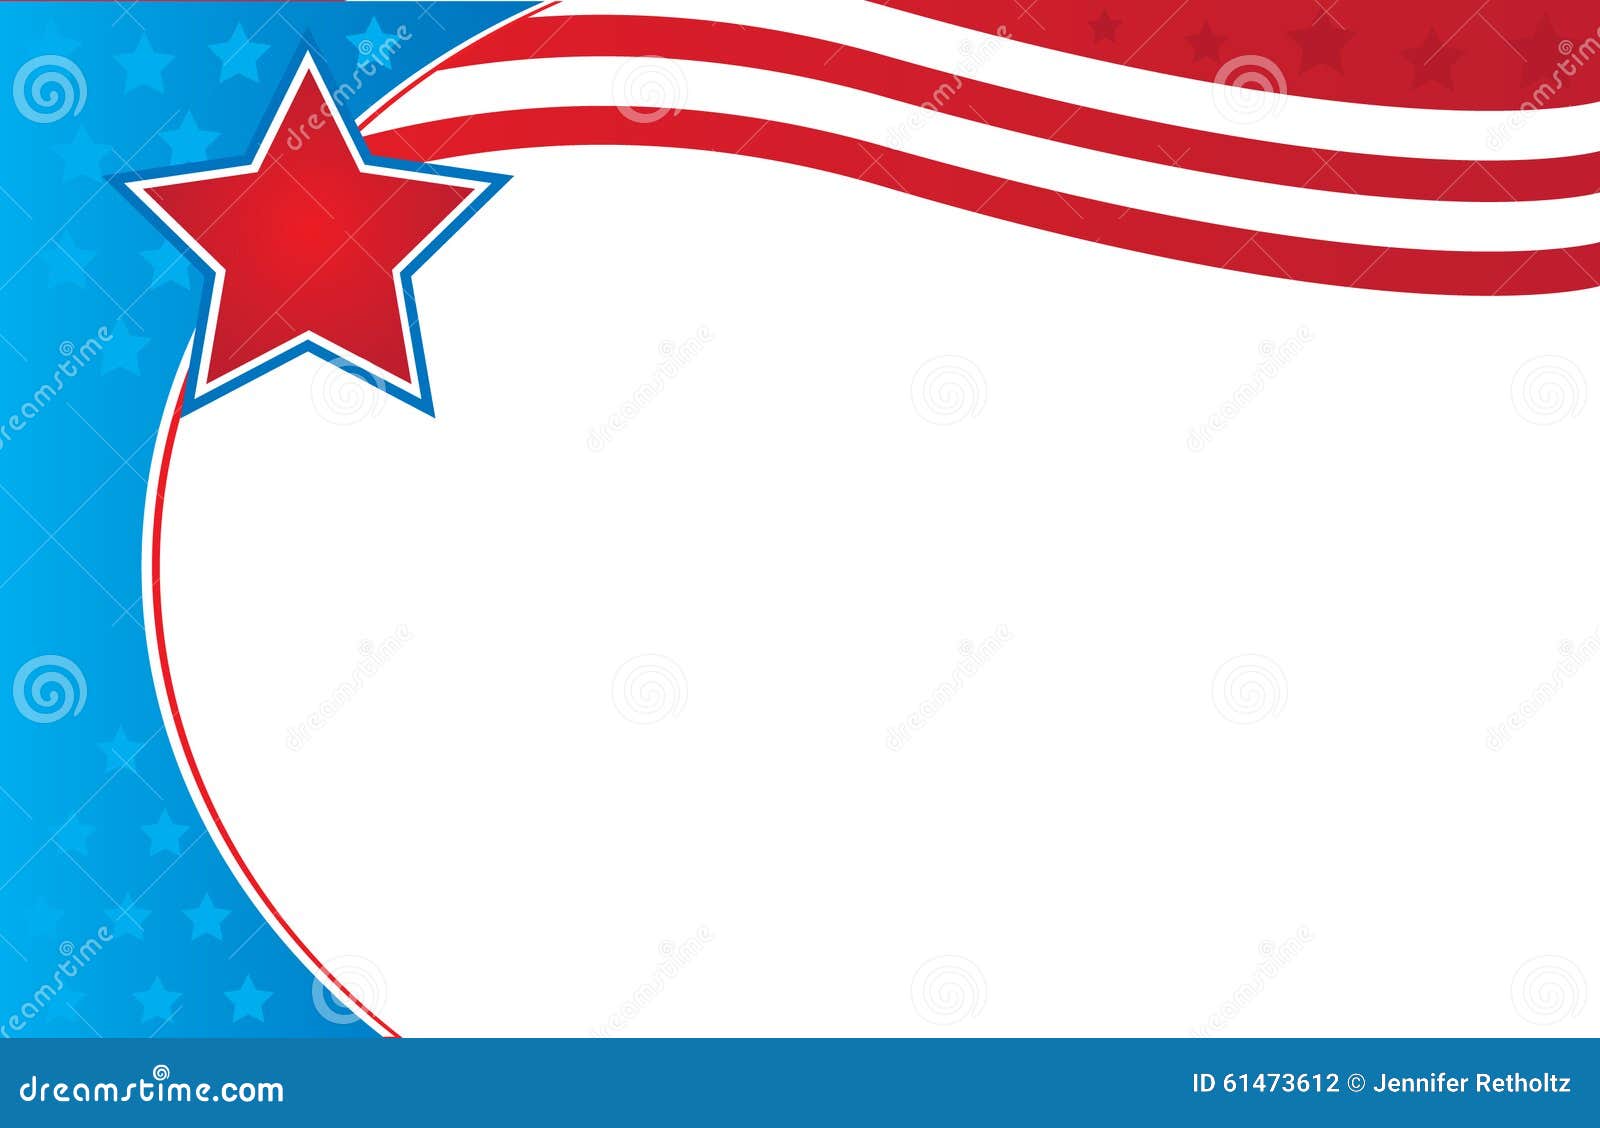 Patriotic Border Flyer Template Stock Illustration - Image: 614736121300 x 933